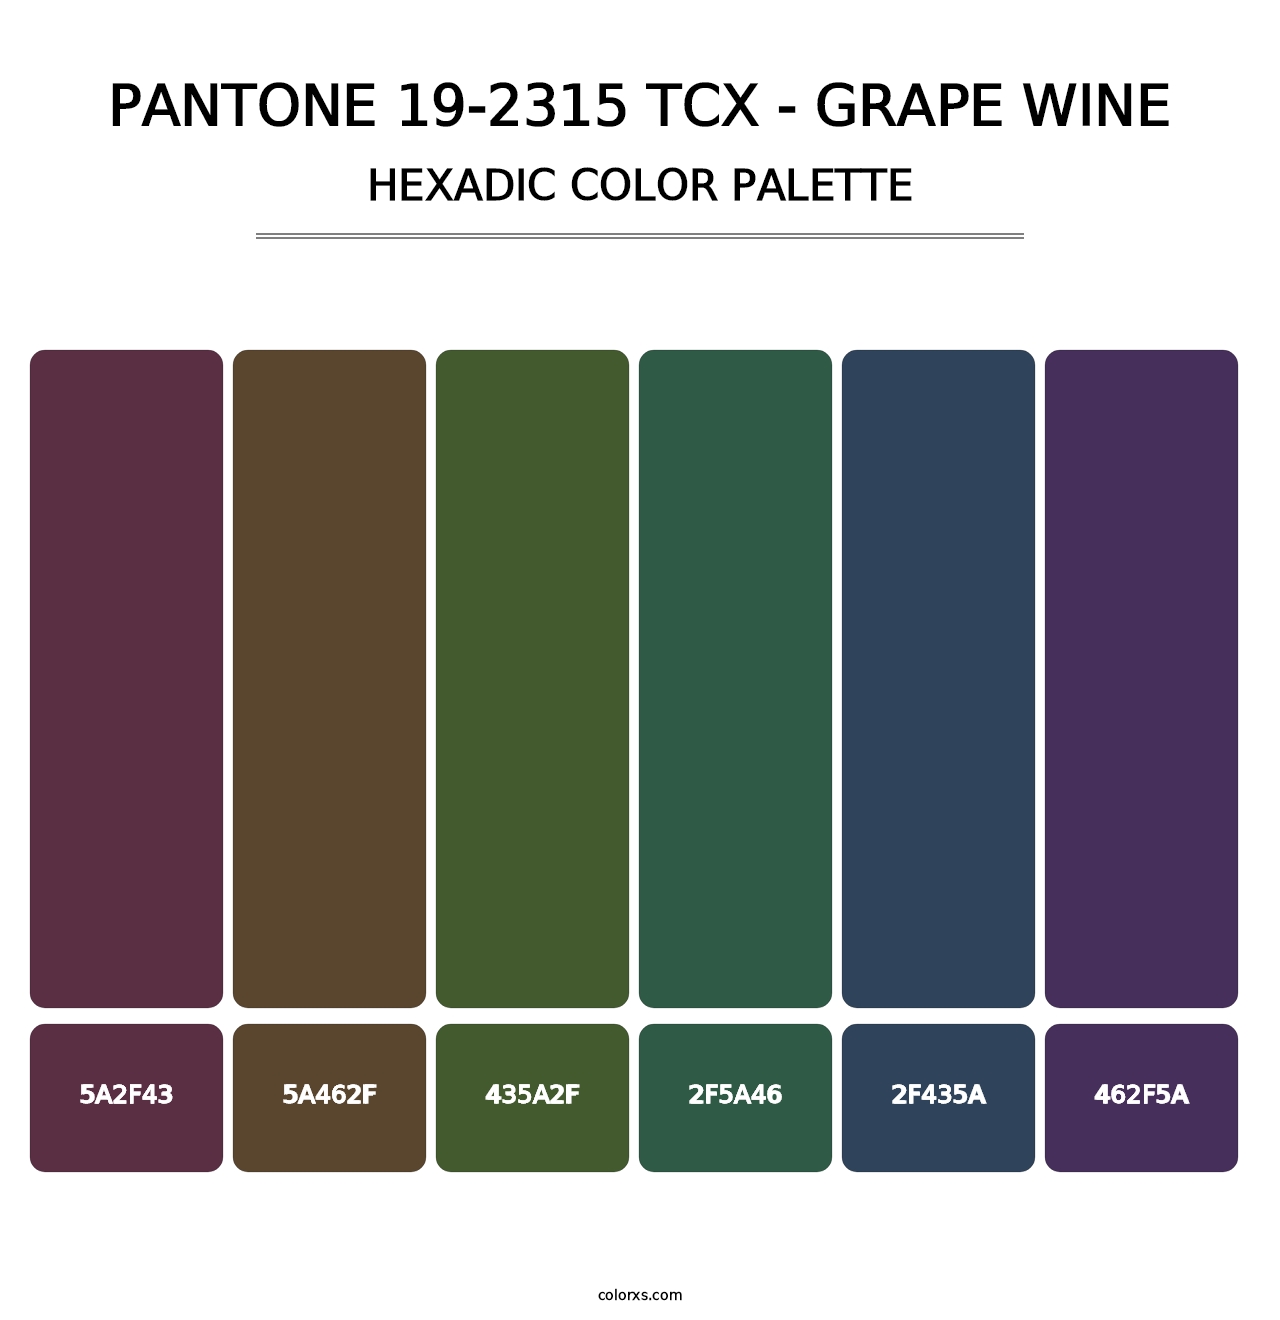 PANTONE 19-2315 TCX - Grape Wine - Hexadic Color Palette